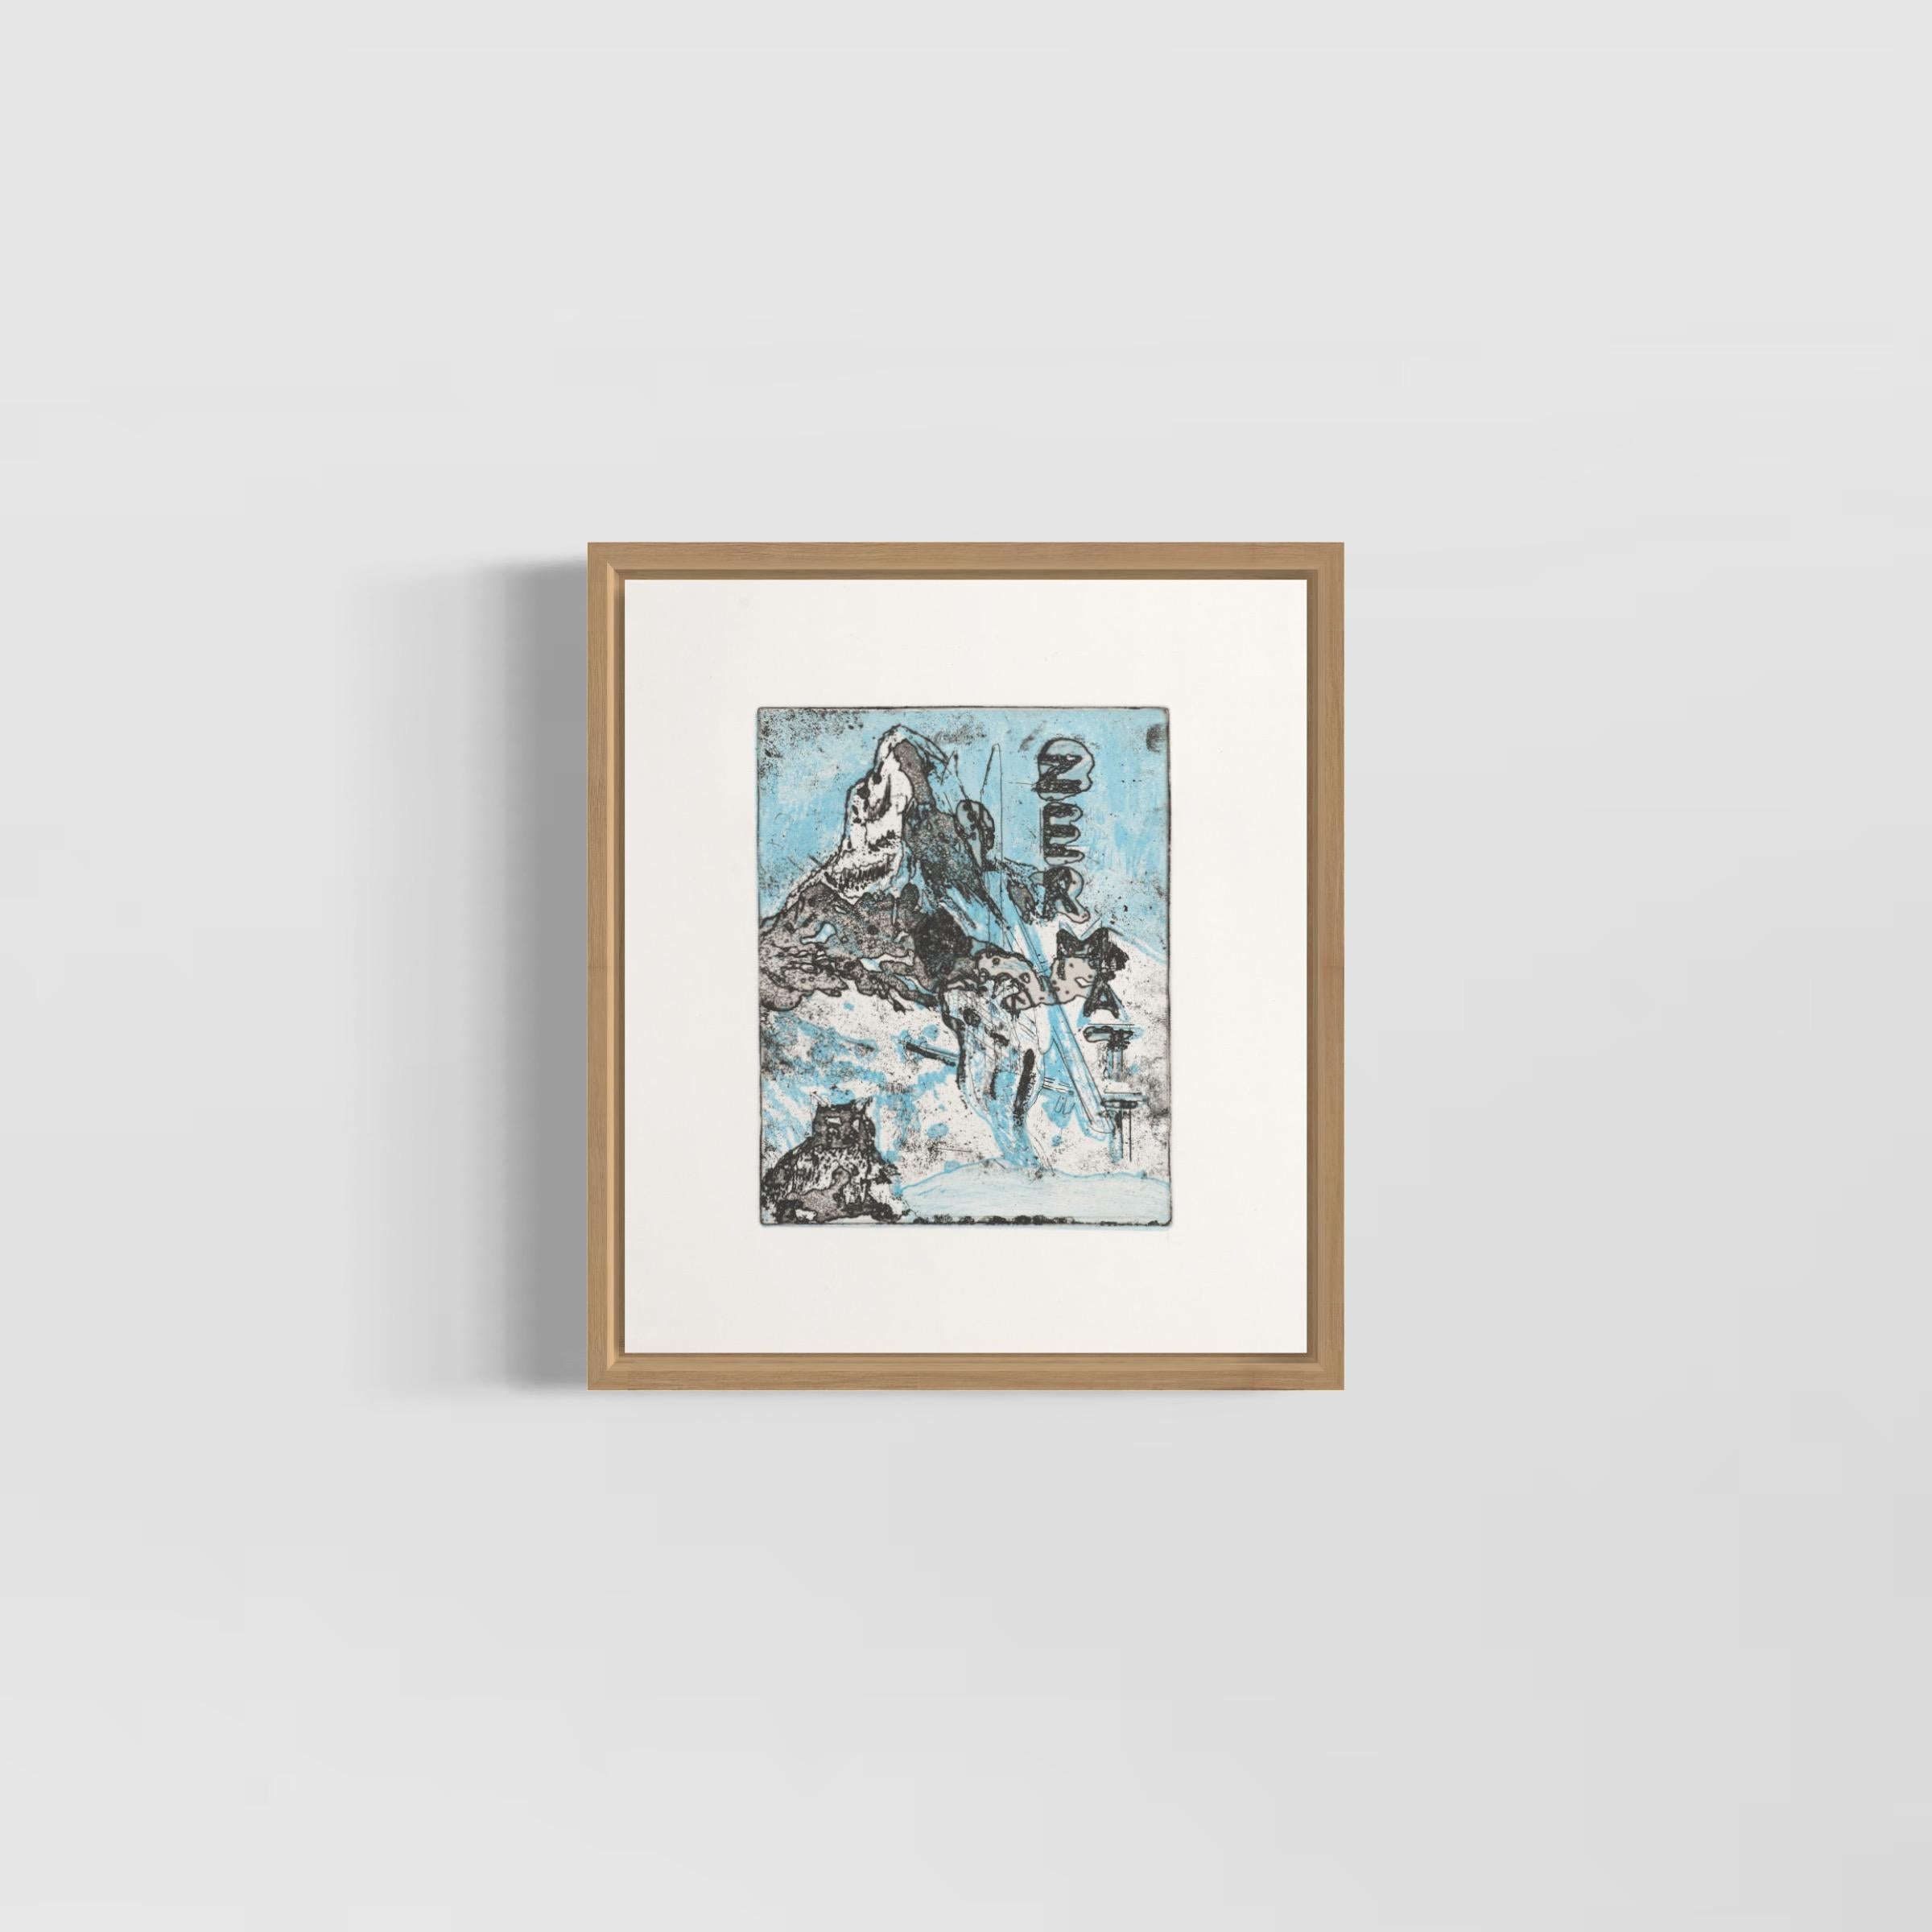 Zermatt 2021, 2021, Contemporary, 21st Century, Magic Realism - Print by Peter Doig